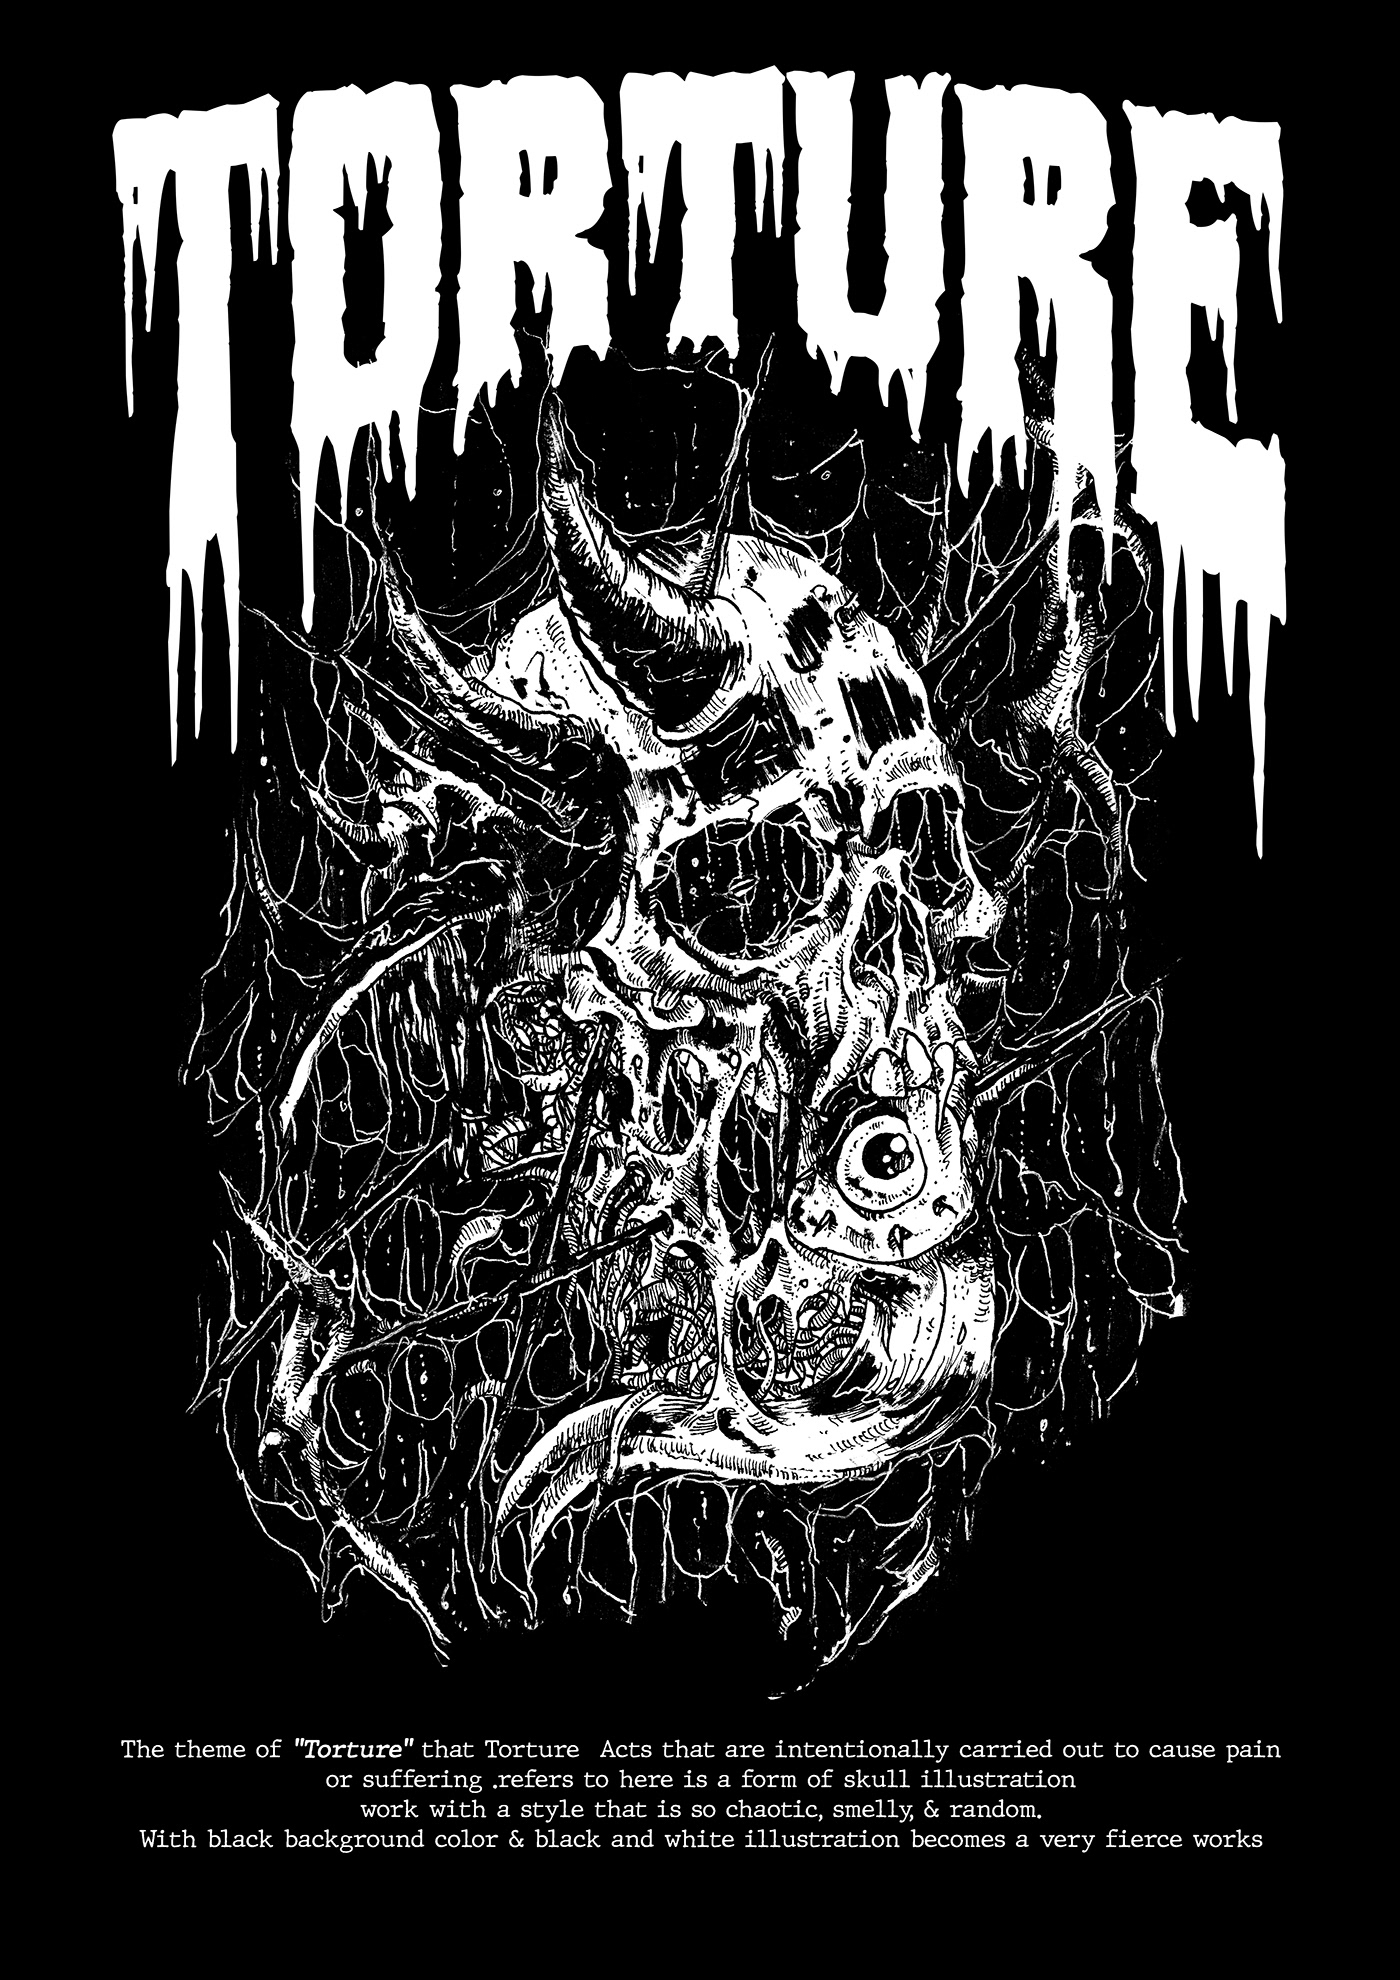 Drawing  penandink underground skullart Deathmetal band ILLUSTRATION  deathmetalartwork metalmerch skulldrawing